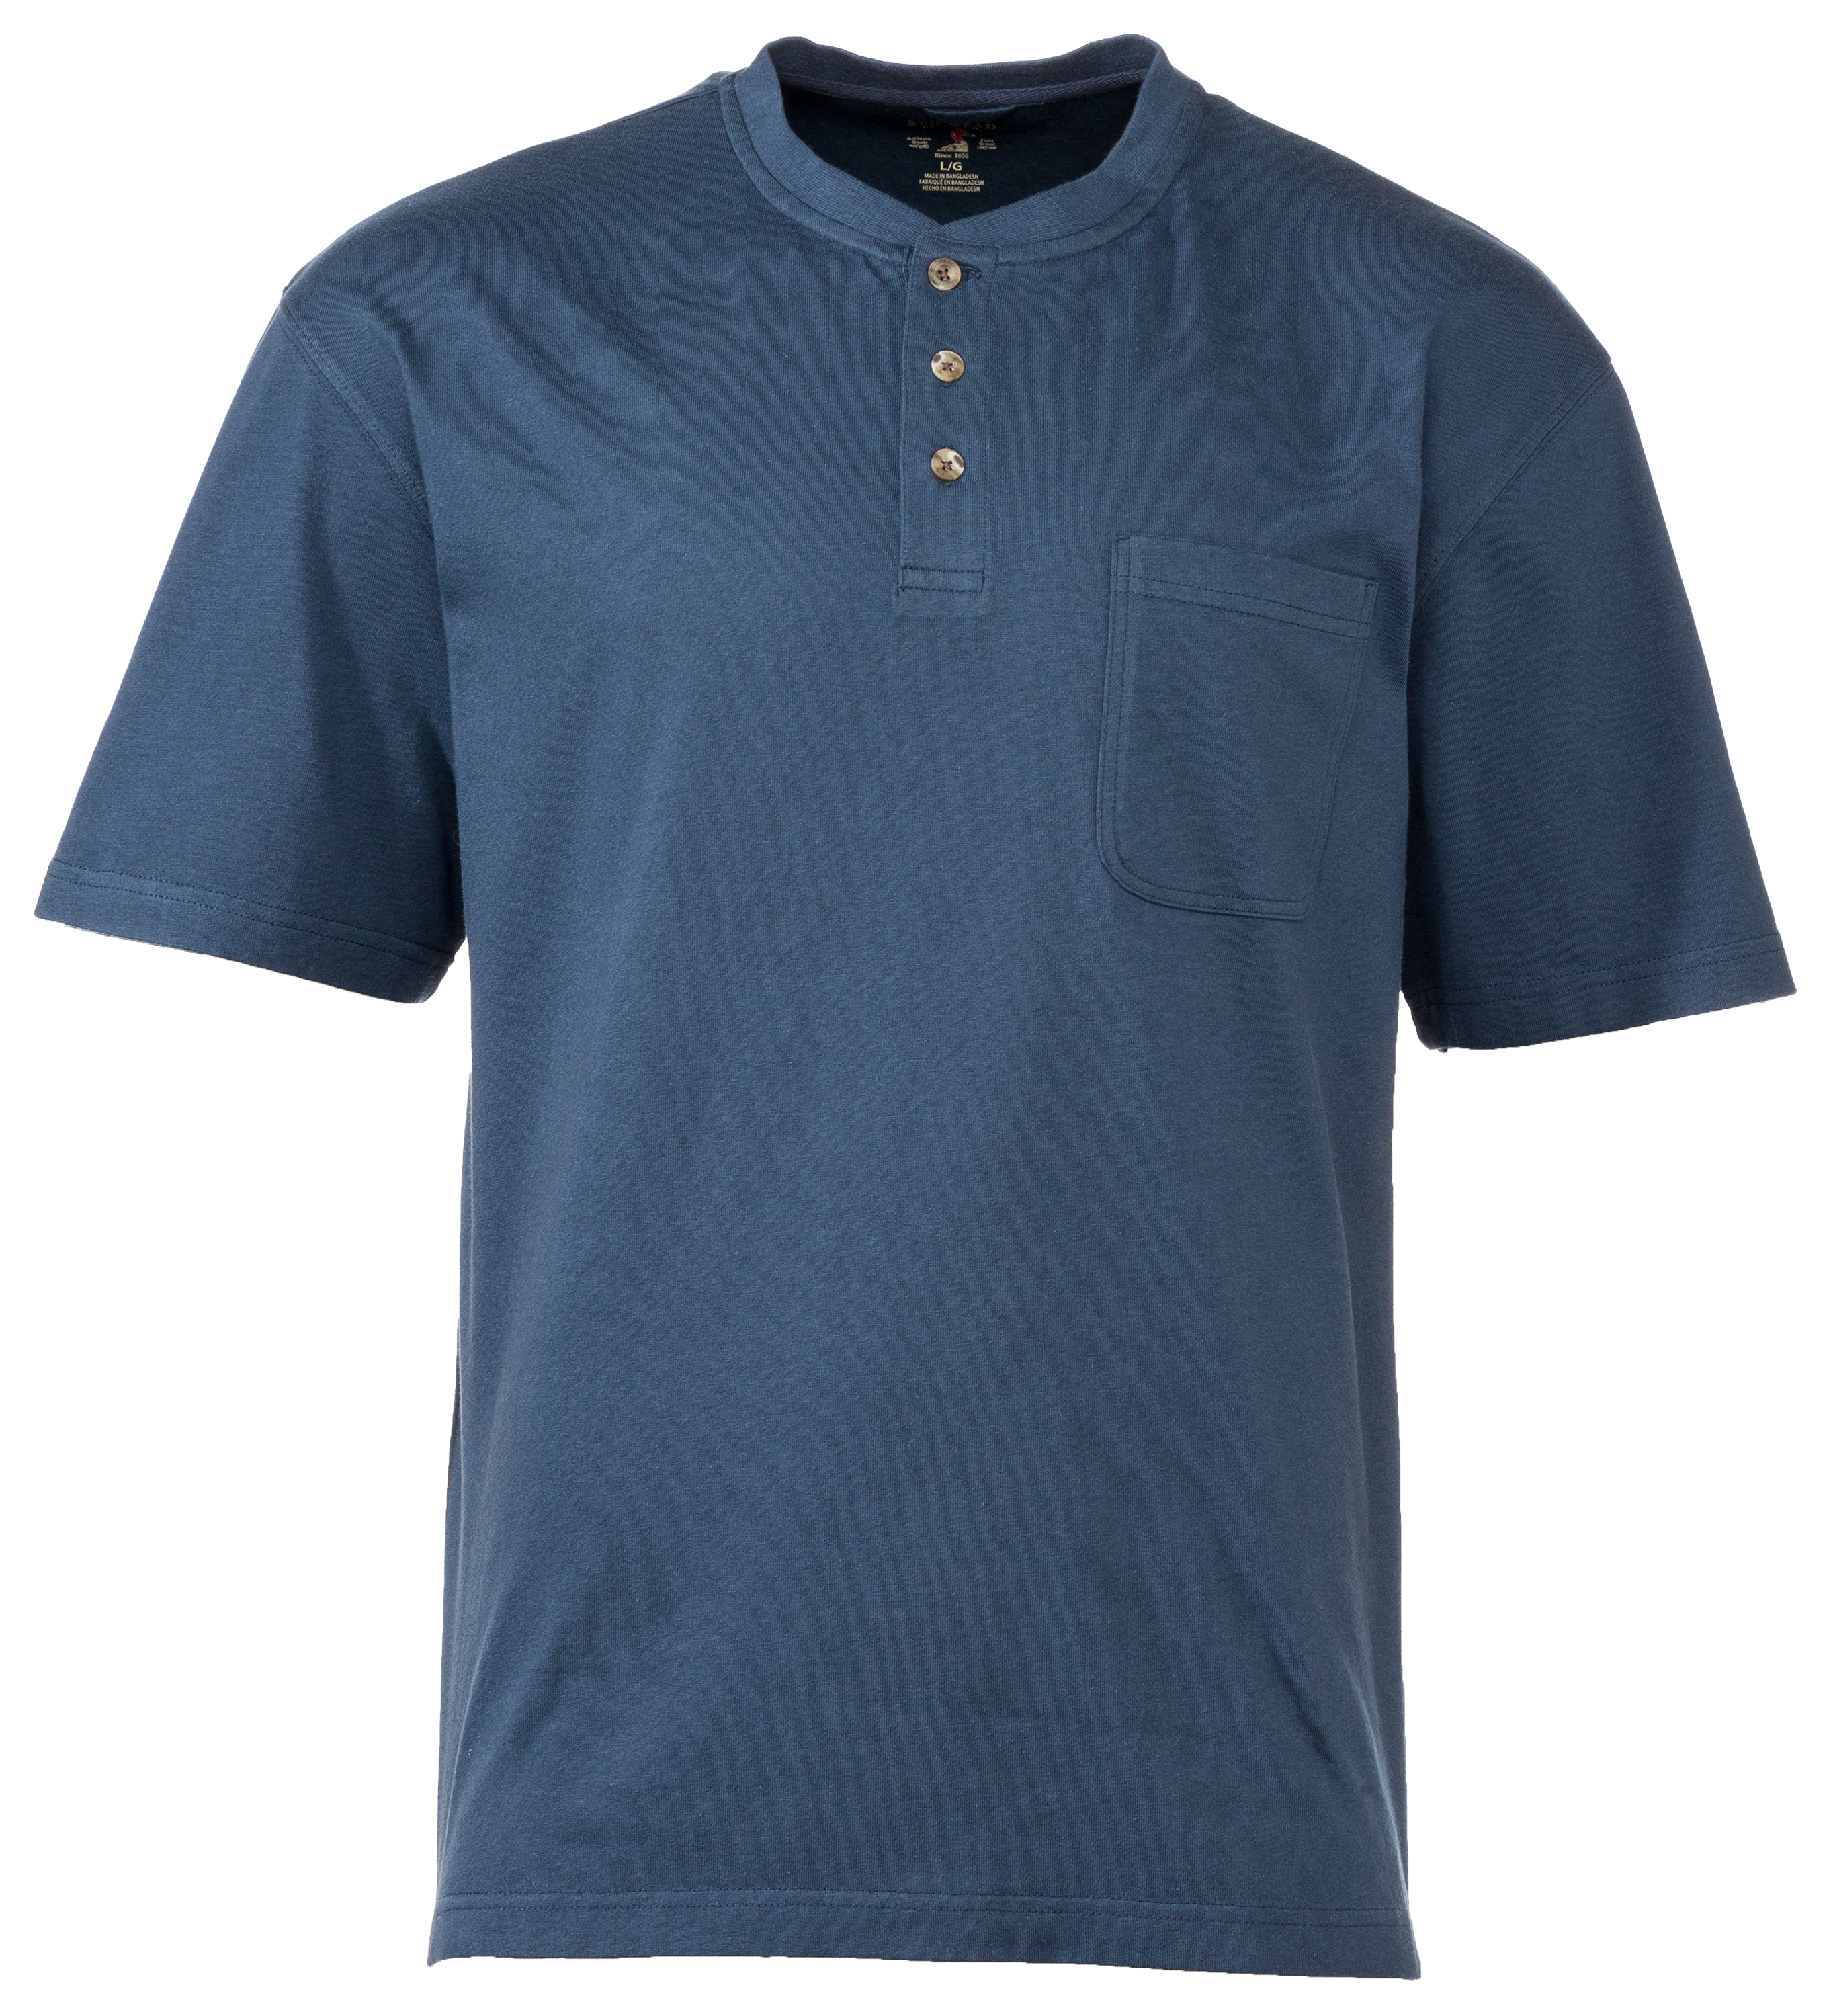 RedHead Henley Pocket Short-Sleeve Shirt for Men - Cadet Blue - S